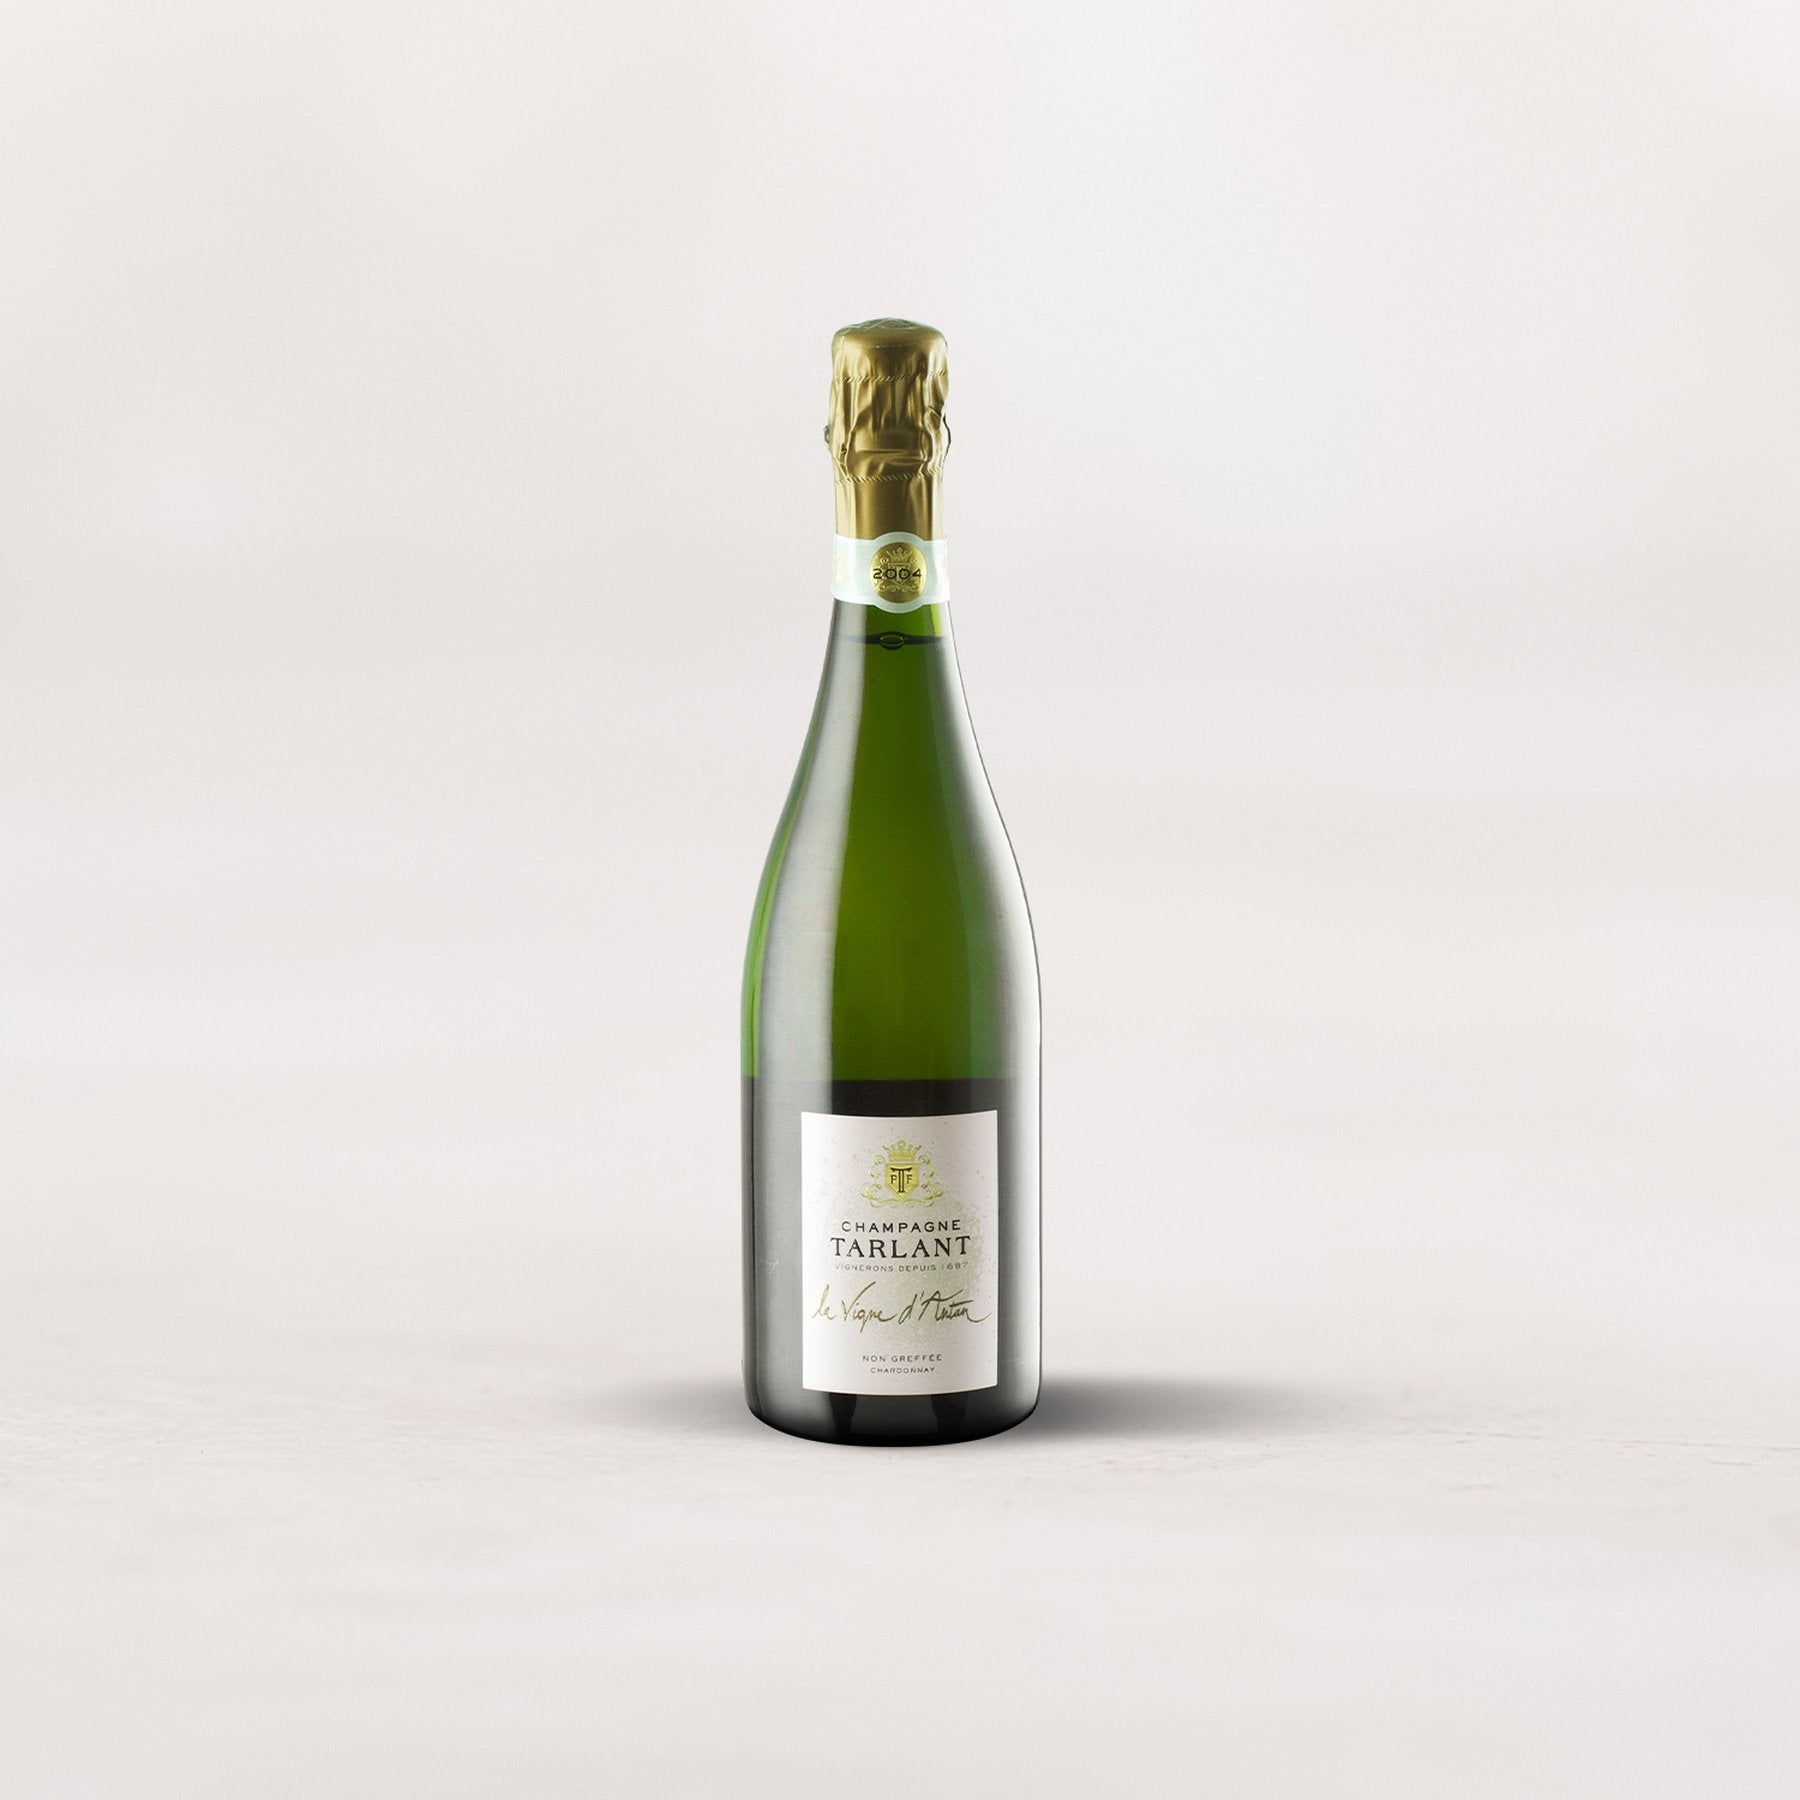 Champagne Tarlant, “La Vigne d’Antan” Non Greffée Chardonnay